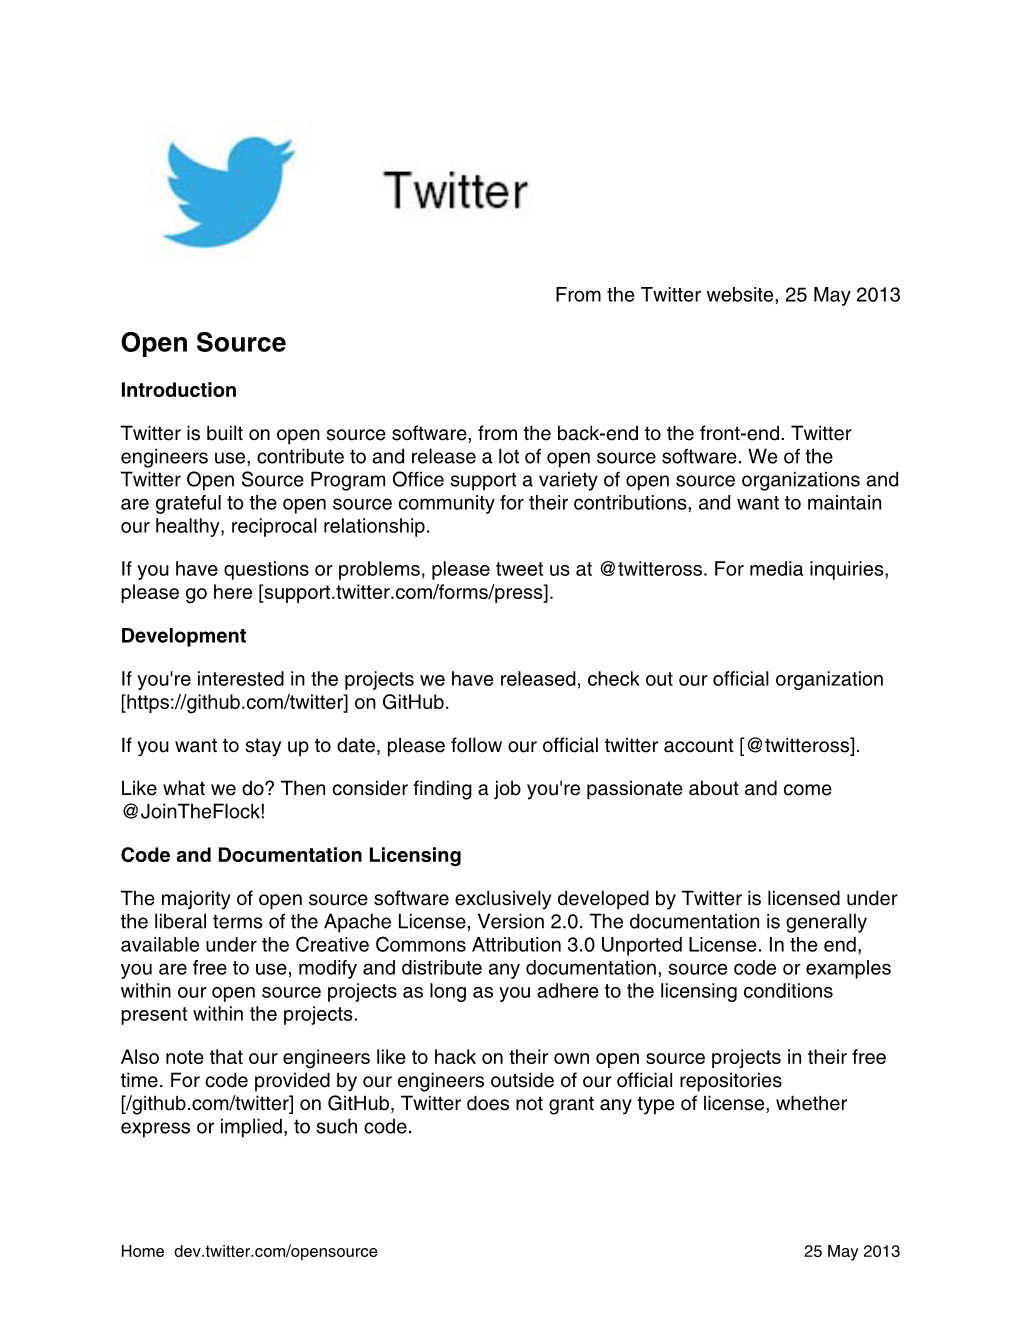 Twitter Open Source